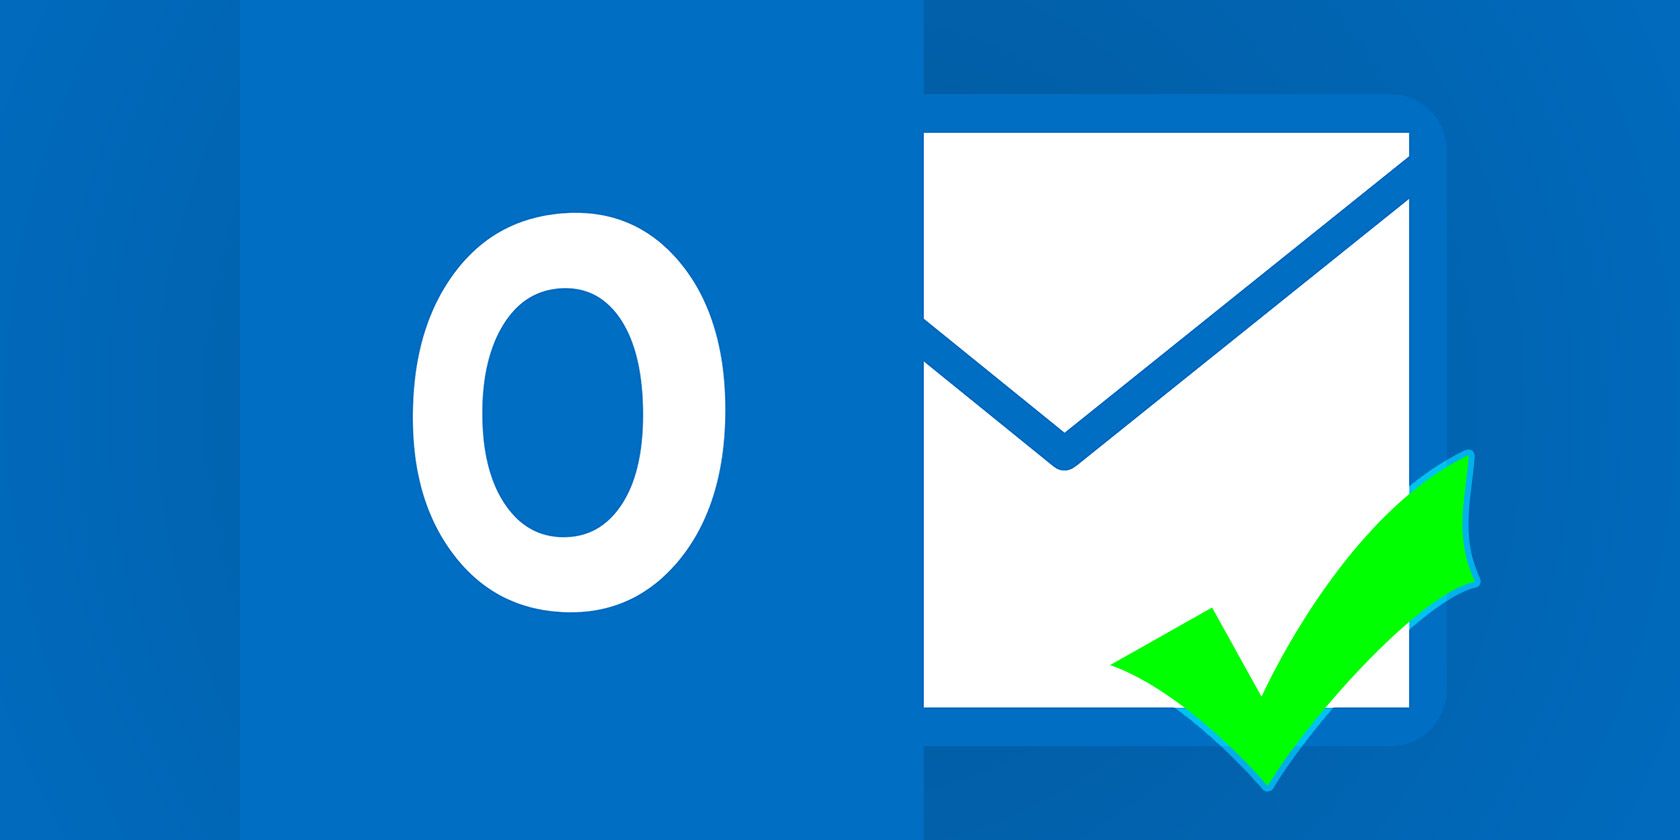 Outlook logo with a checkmark symbol